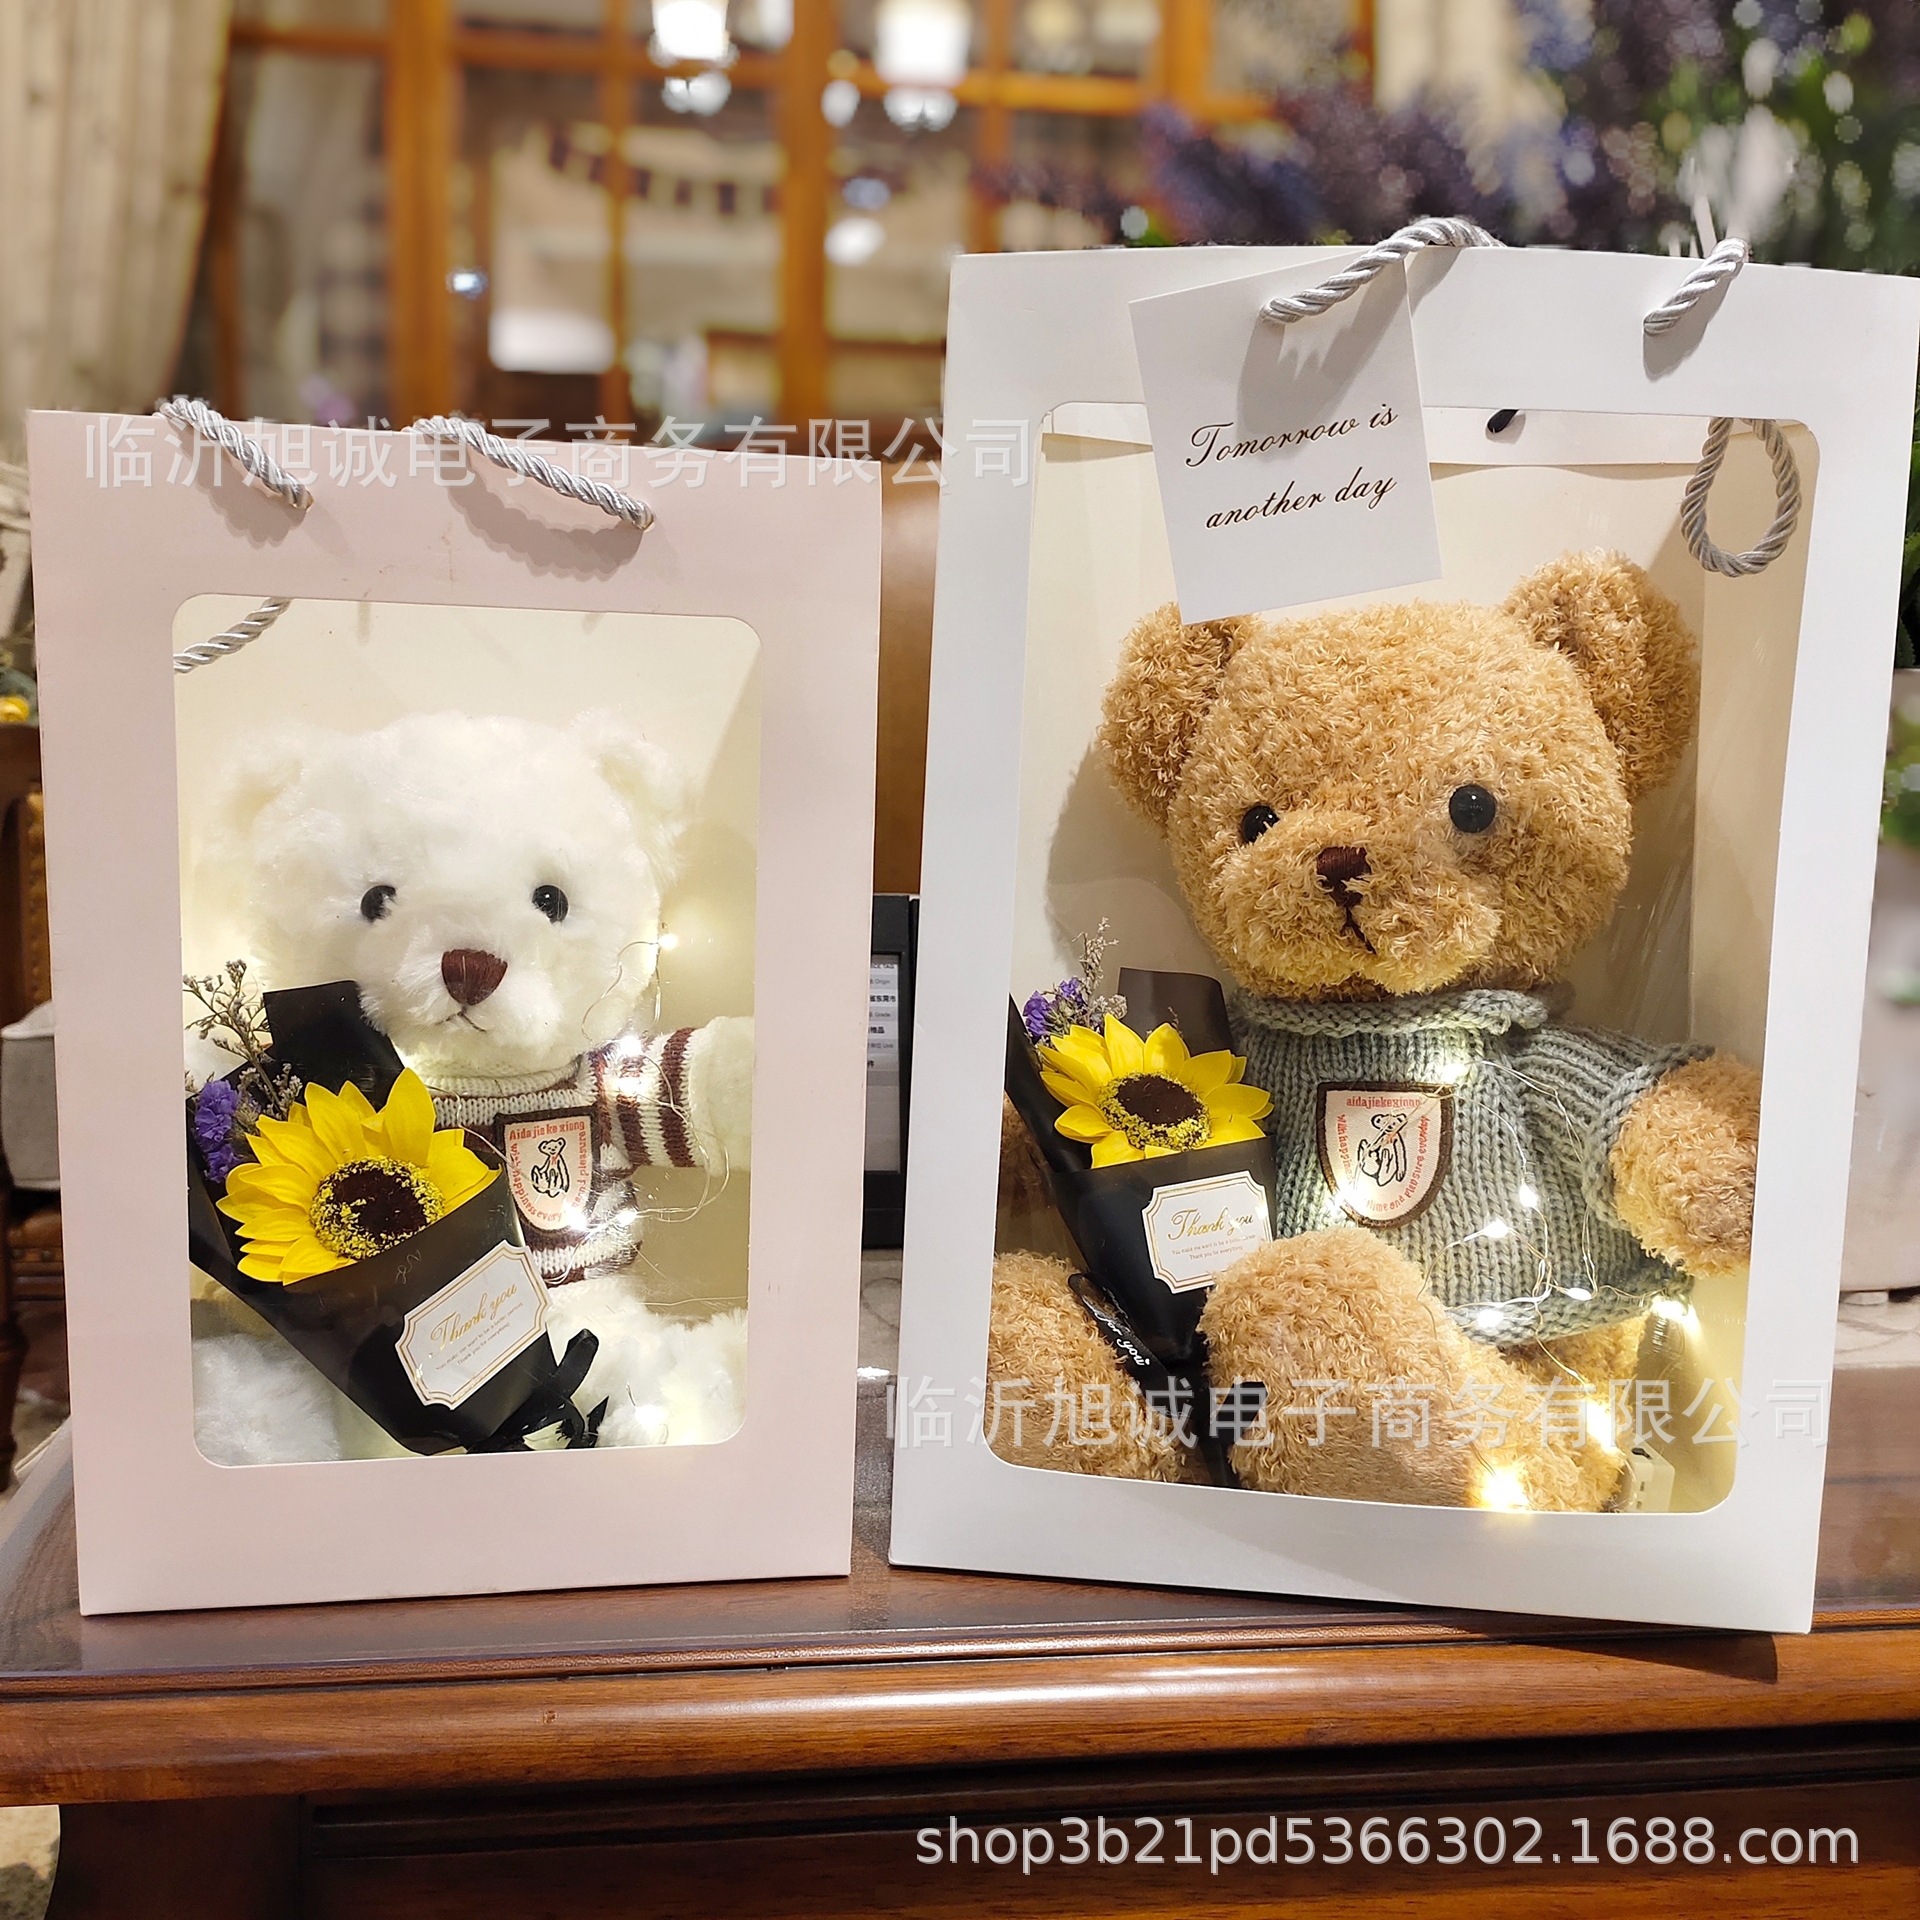 Wholesale Teddy Bear Doll Floor Push Doll Plush Toys 38 38 Women's Valentine's Day Birthday Gift